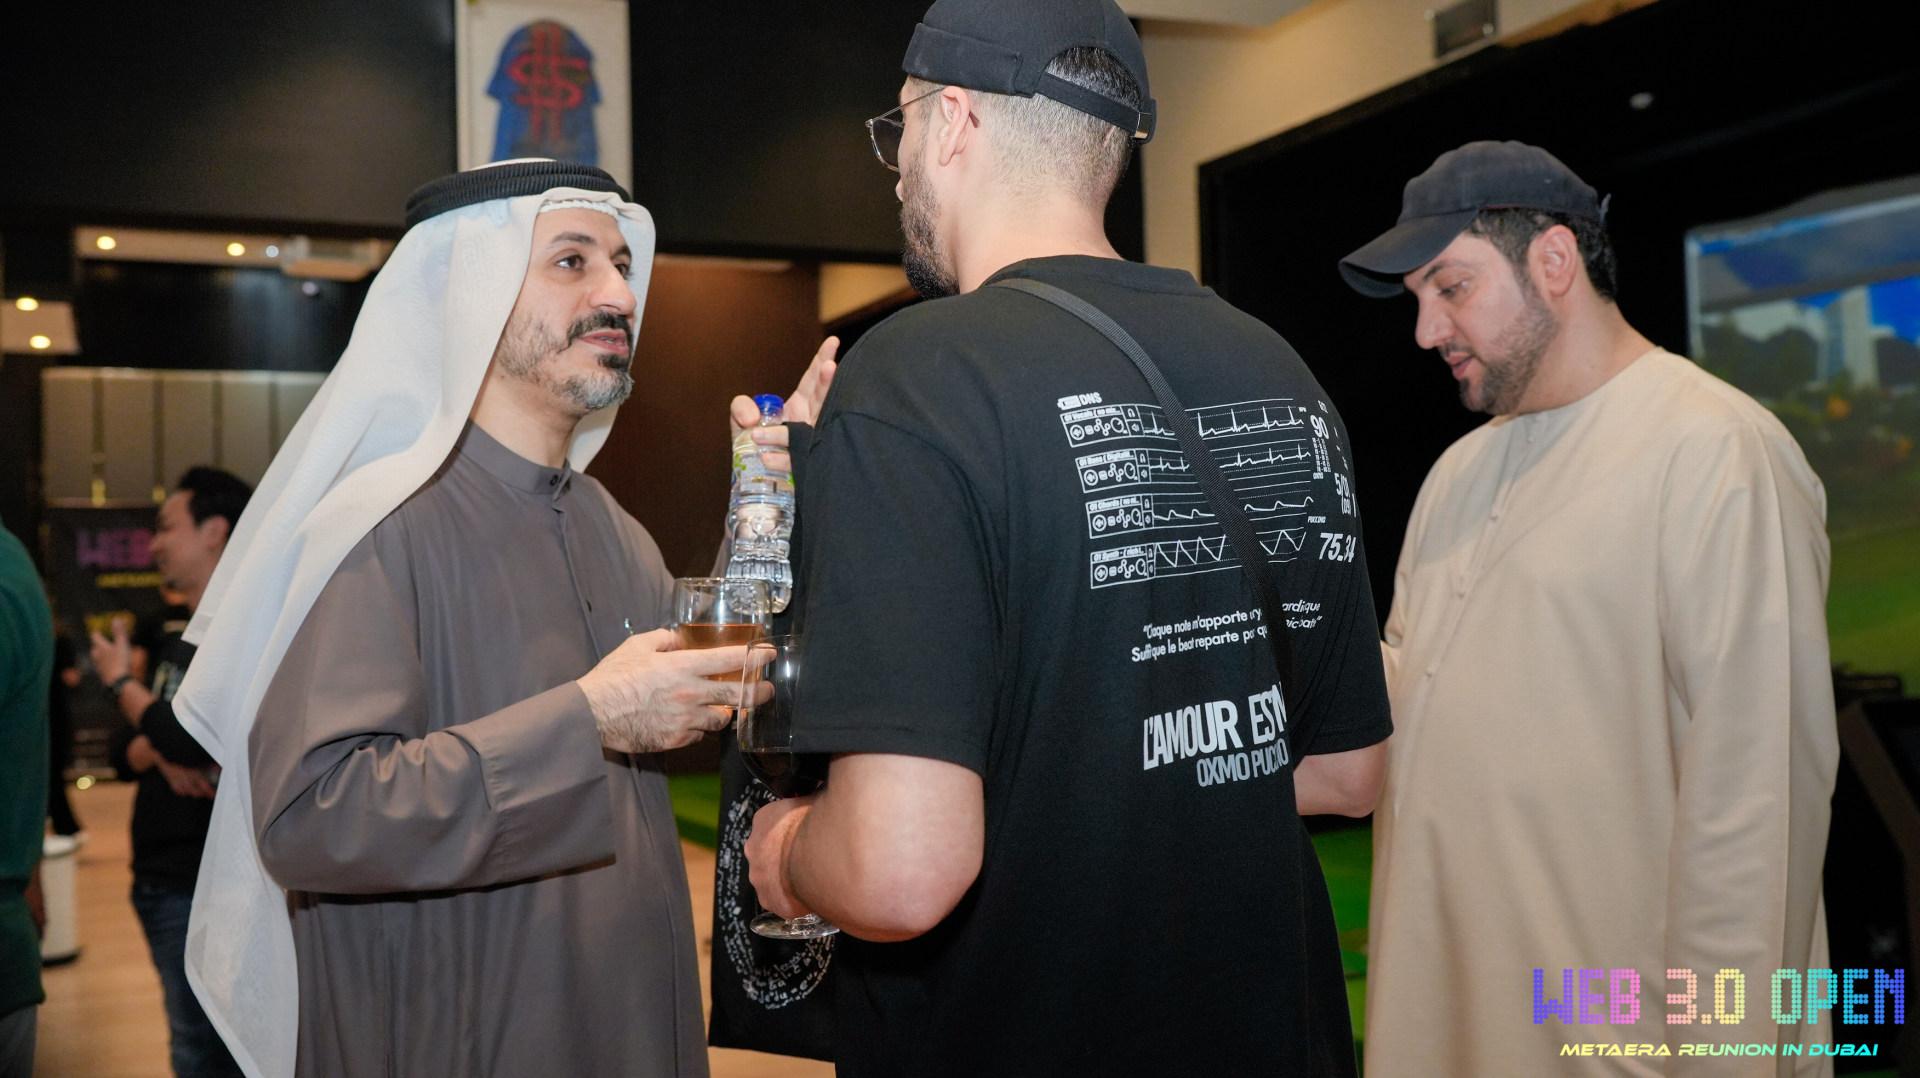 Meta Era 成功籌辦 Web 3.0 Open - Meta Era Reunion in Dubai 高峰會，暢想杜拜數位經濟新可能